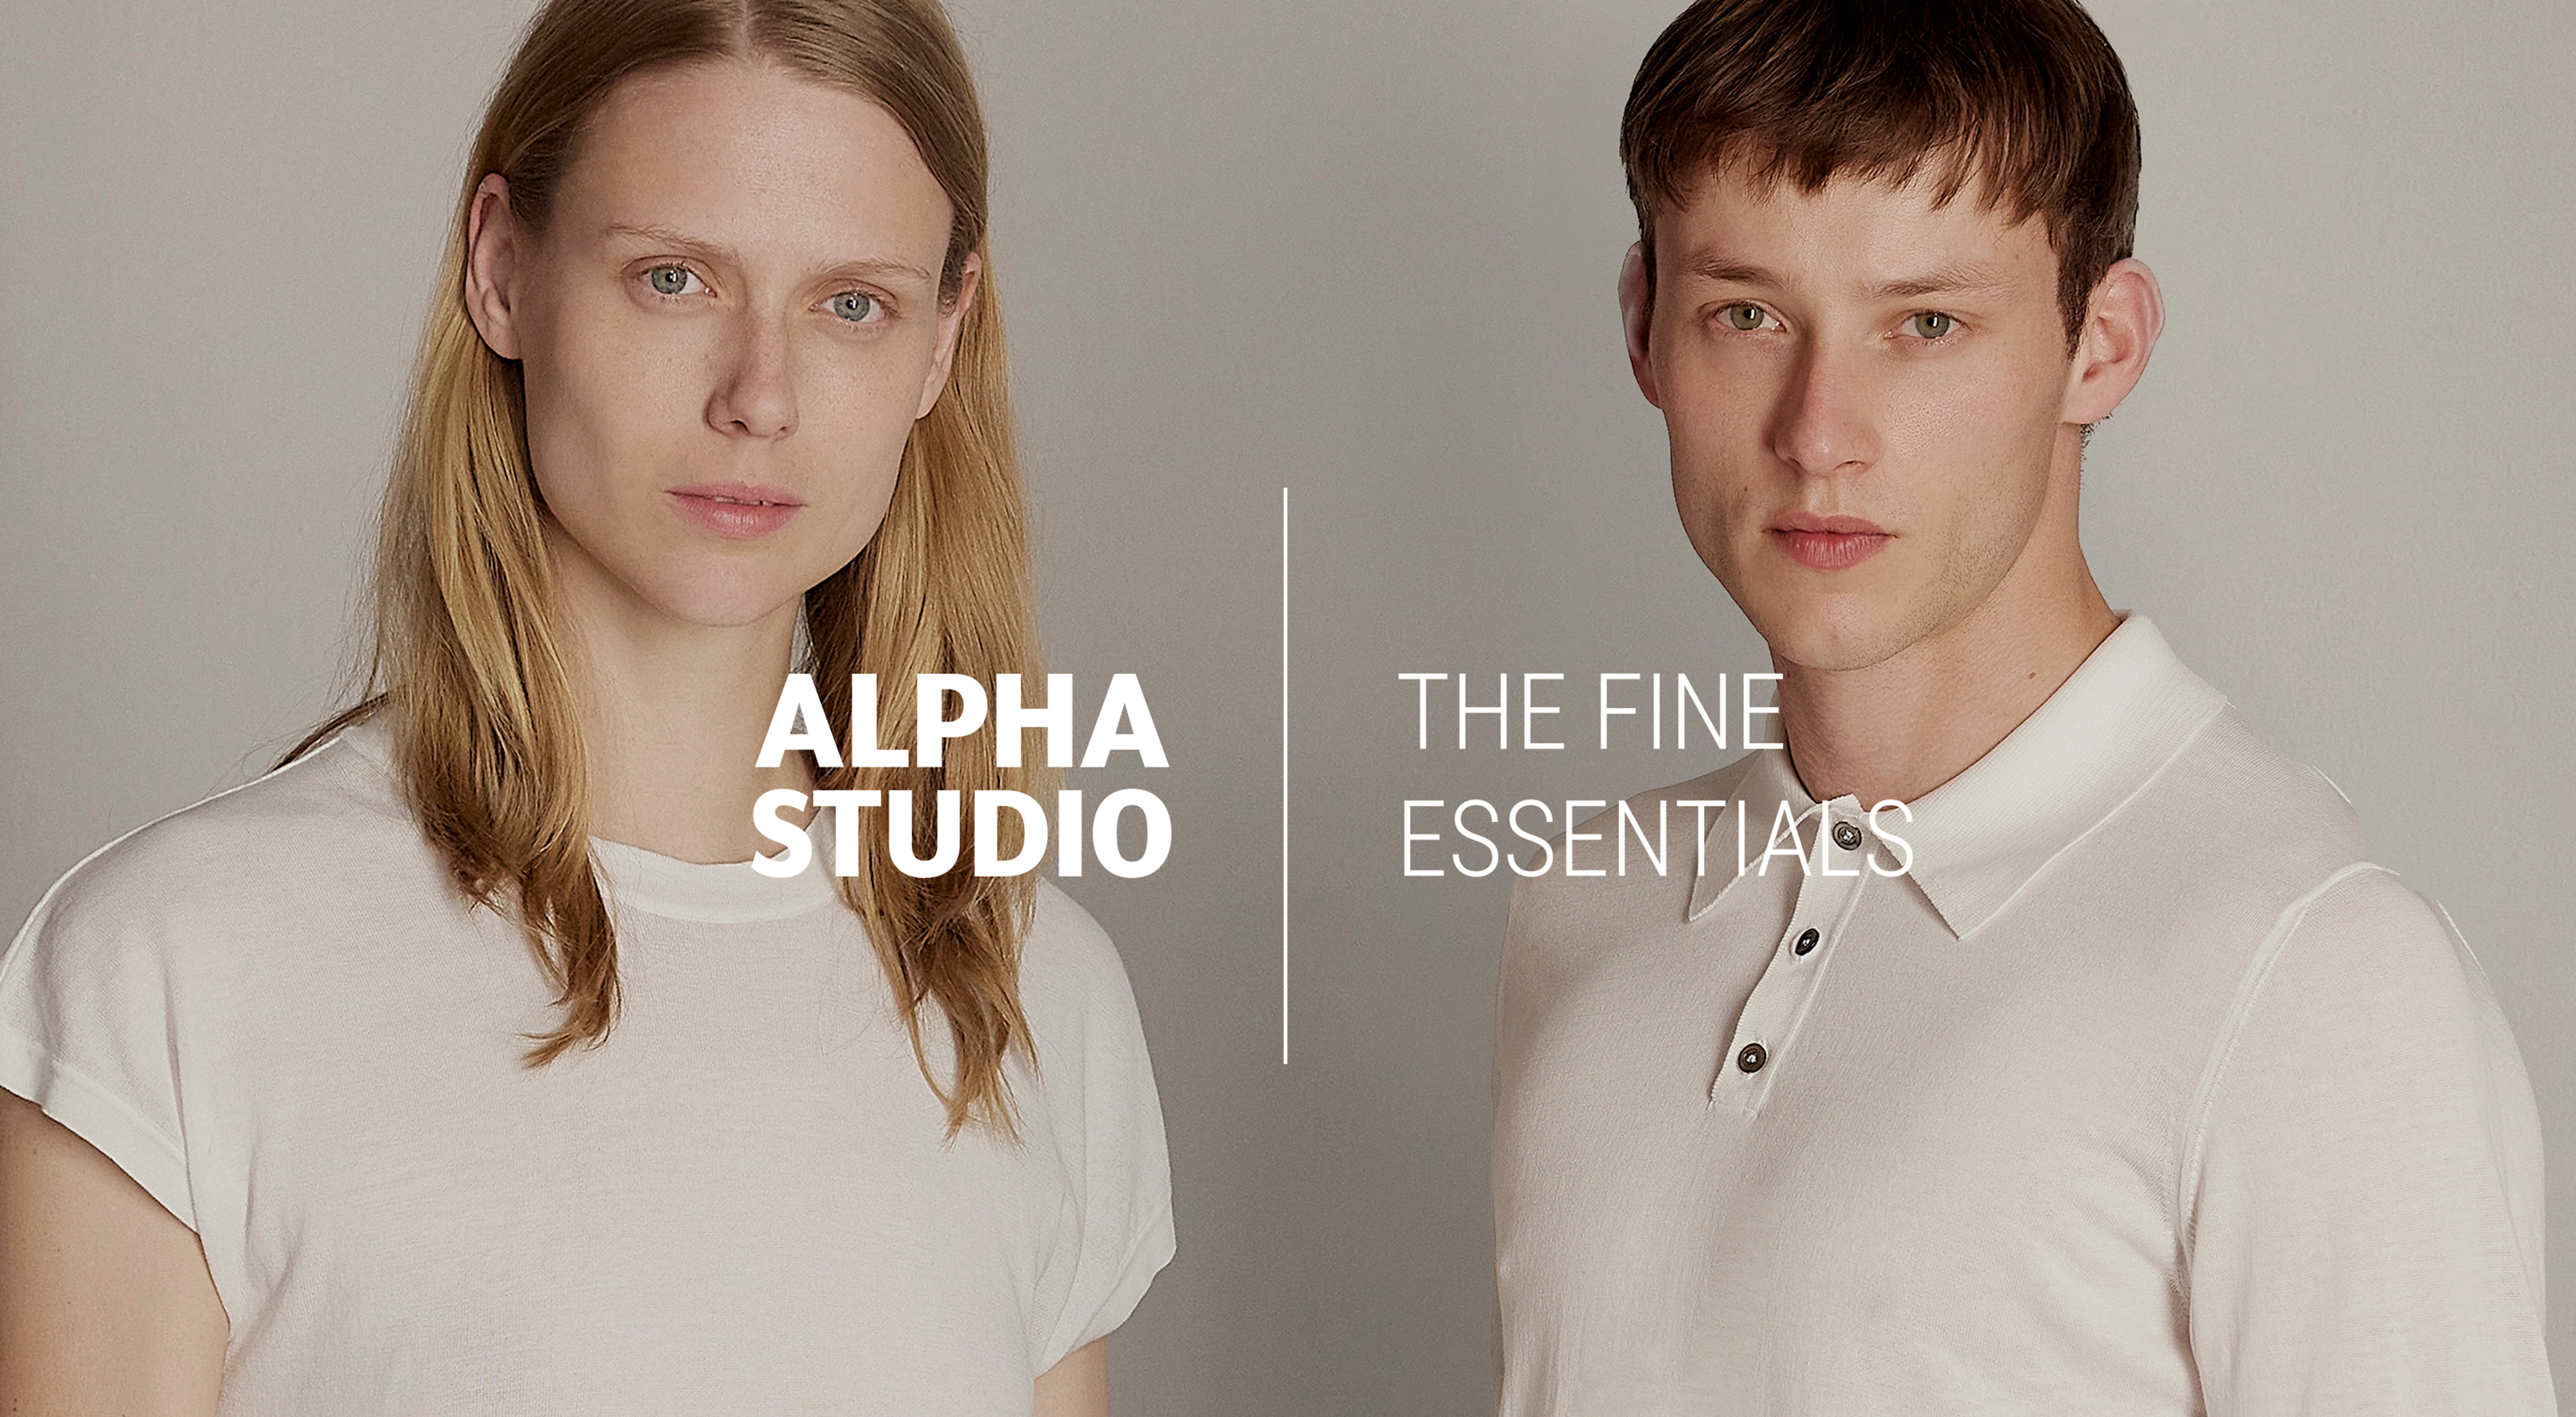 ALPHA STUDIO: The Fine Essentials